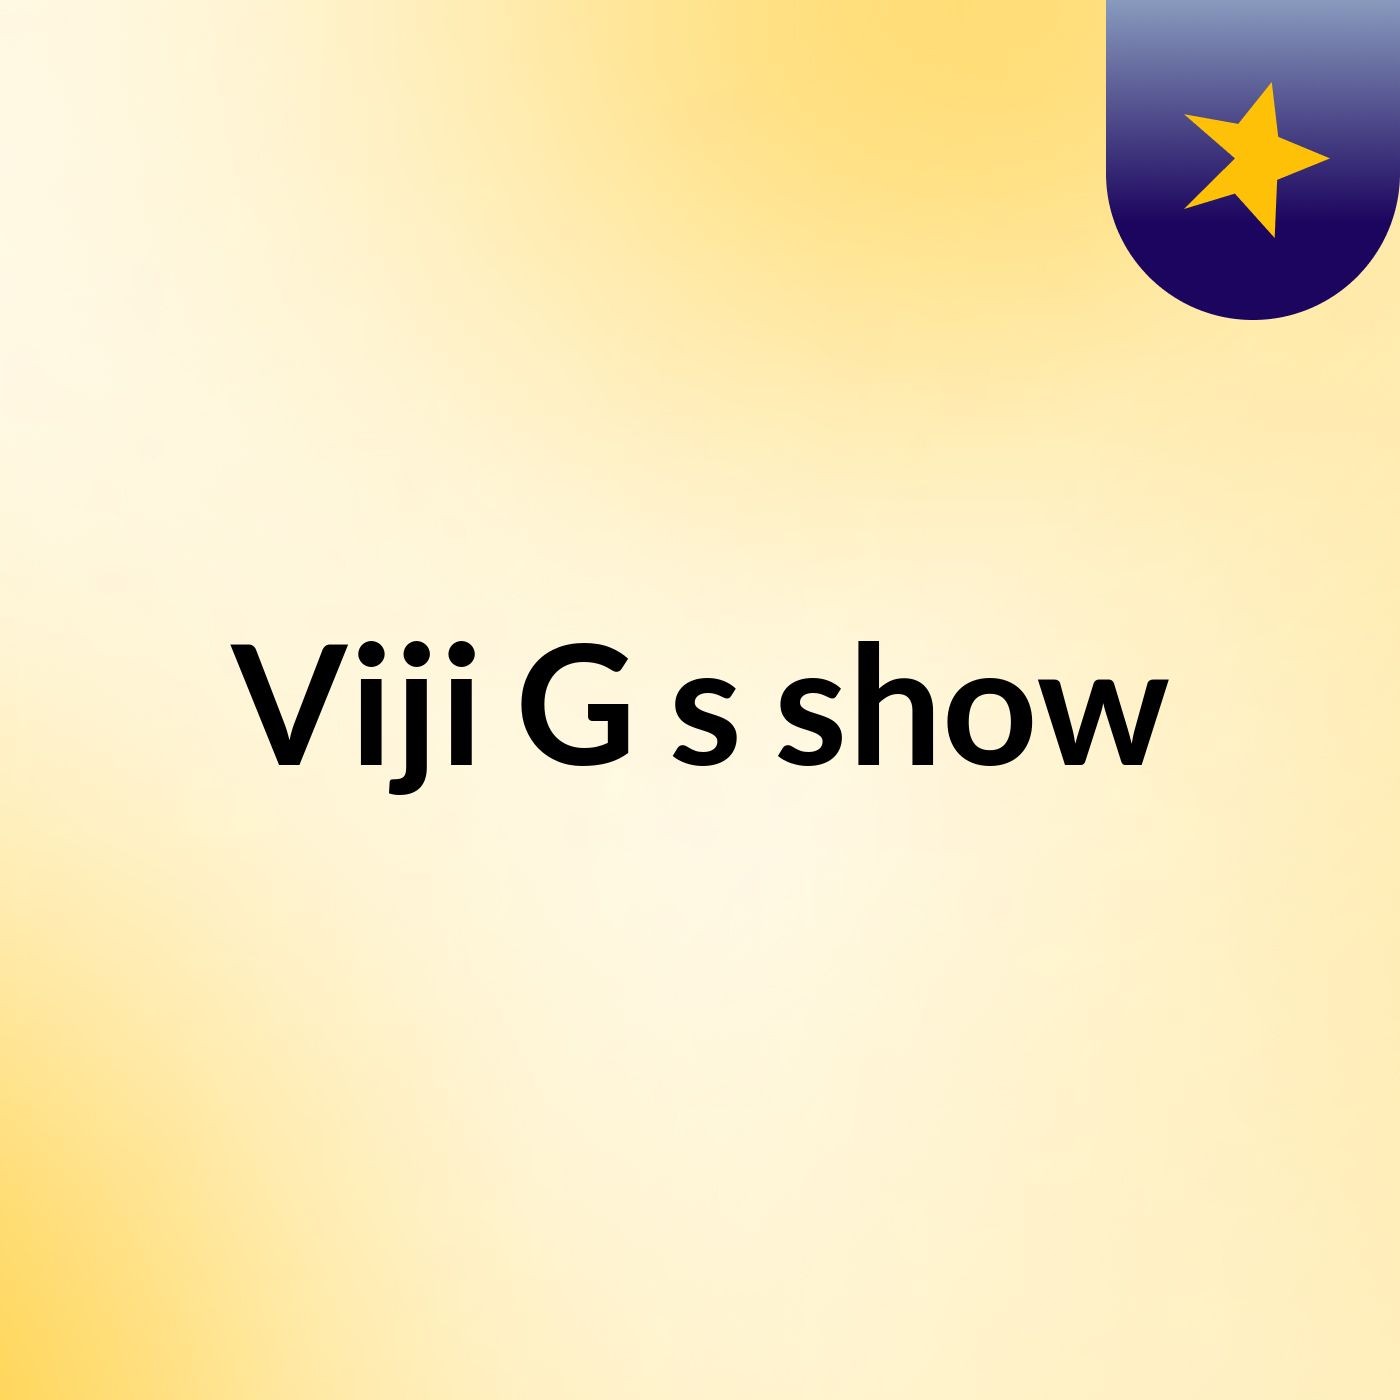 Viji G's show